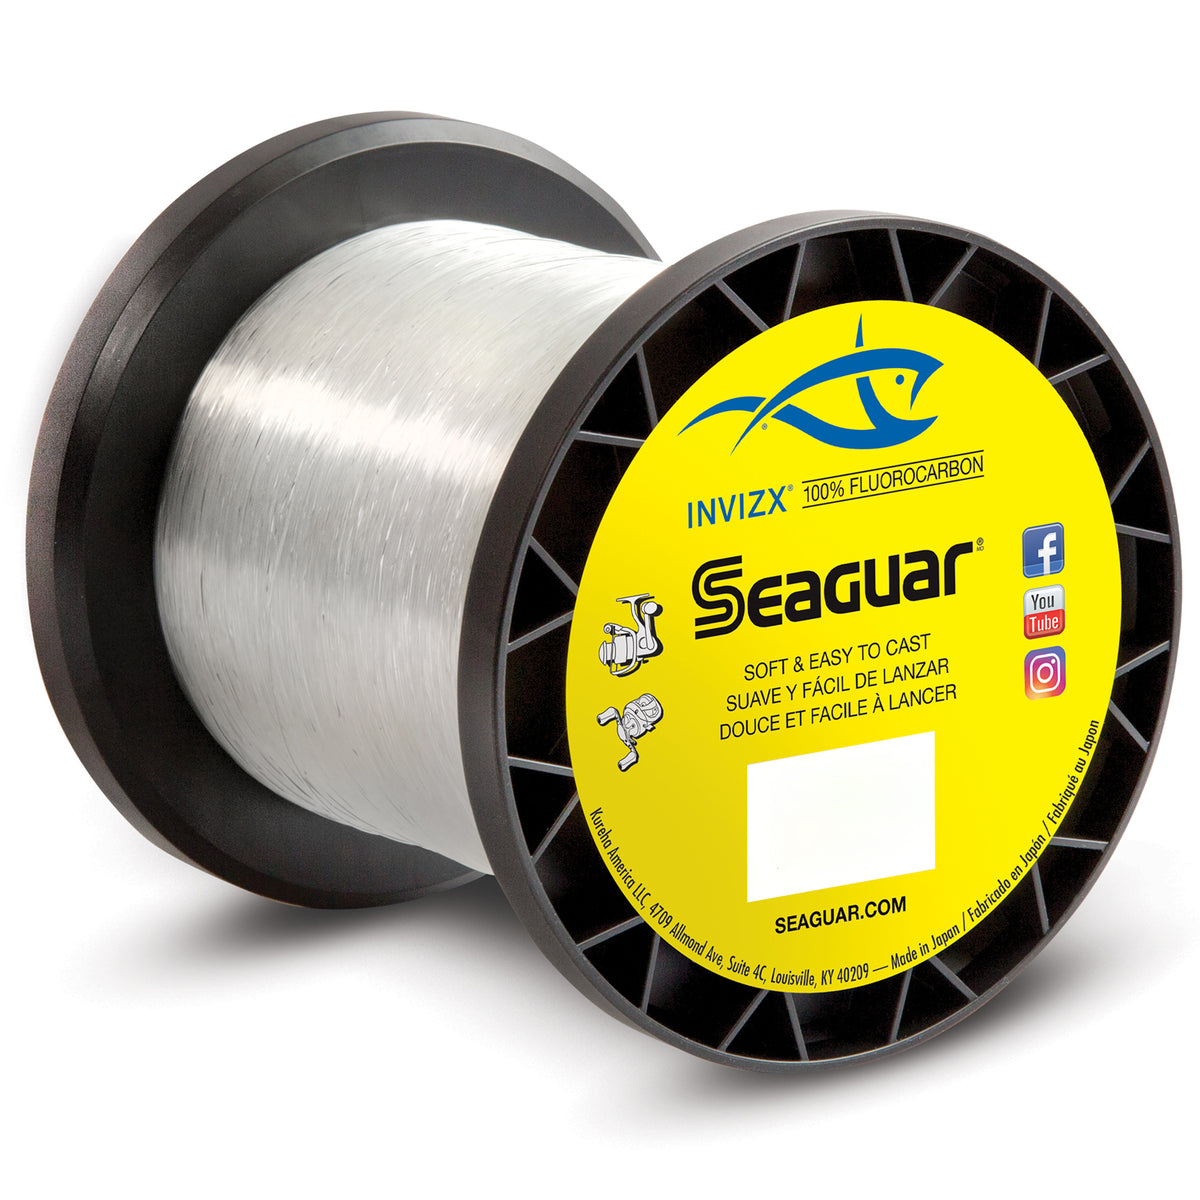 Seaguar Invizx Fluorocarbon Fishing Line 1000 Yards — Discount